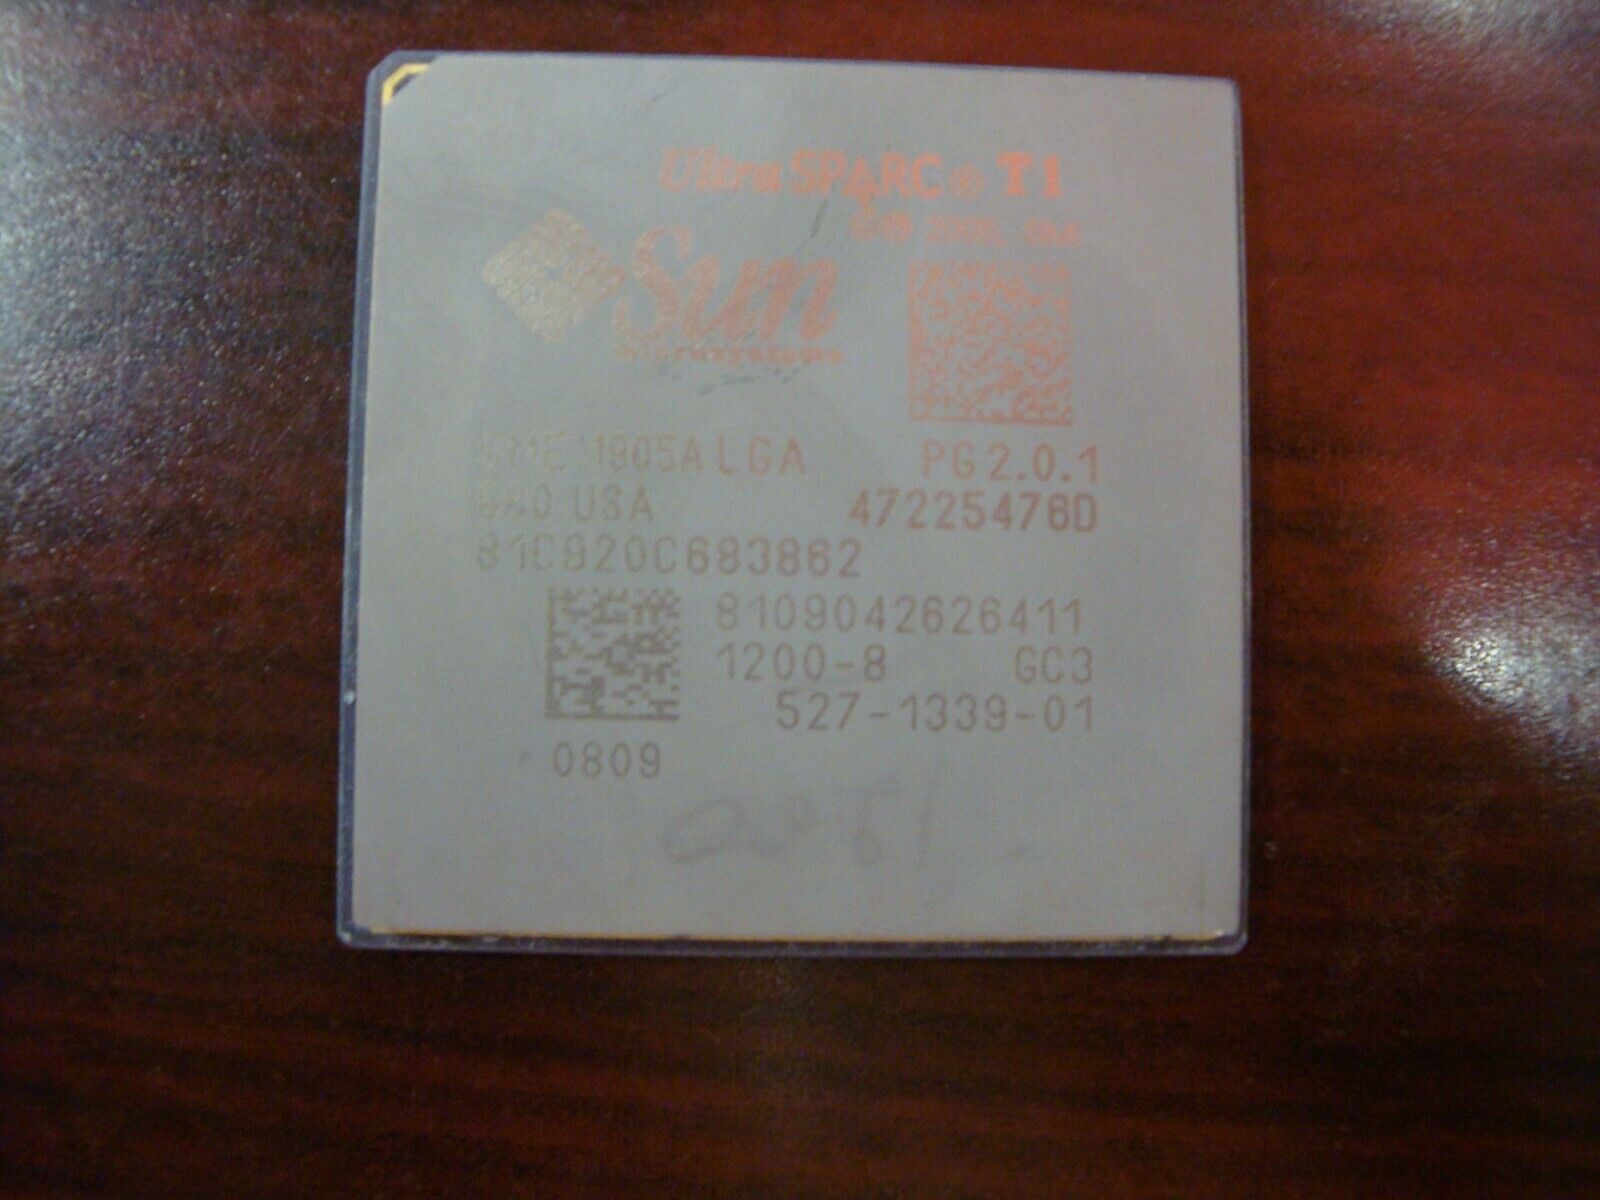 SUN UltraSPARC T1 SME-1905A LGA 980 PG 2.0.1 8-core 1.2GHz Processor 527-1339-01